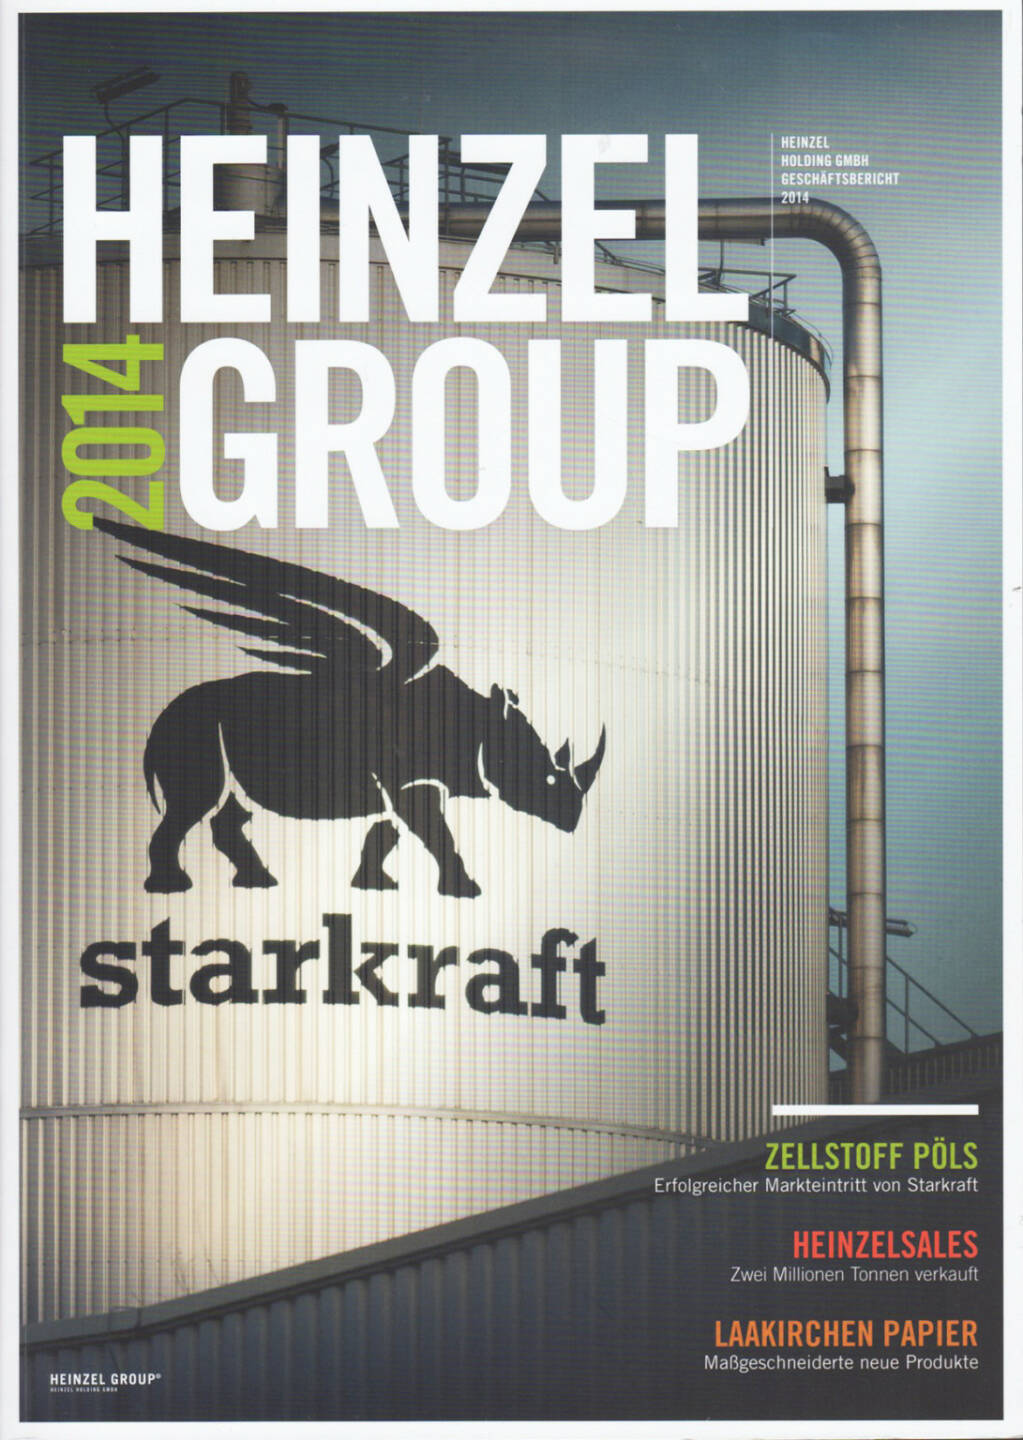 Heinzel Group 2014 - http://boerse-social.com/financebooks/show/heinzel_group_2014